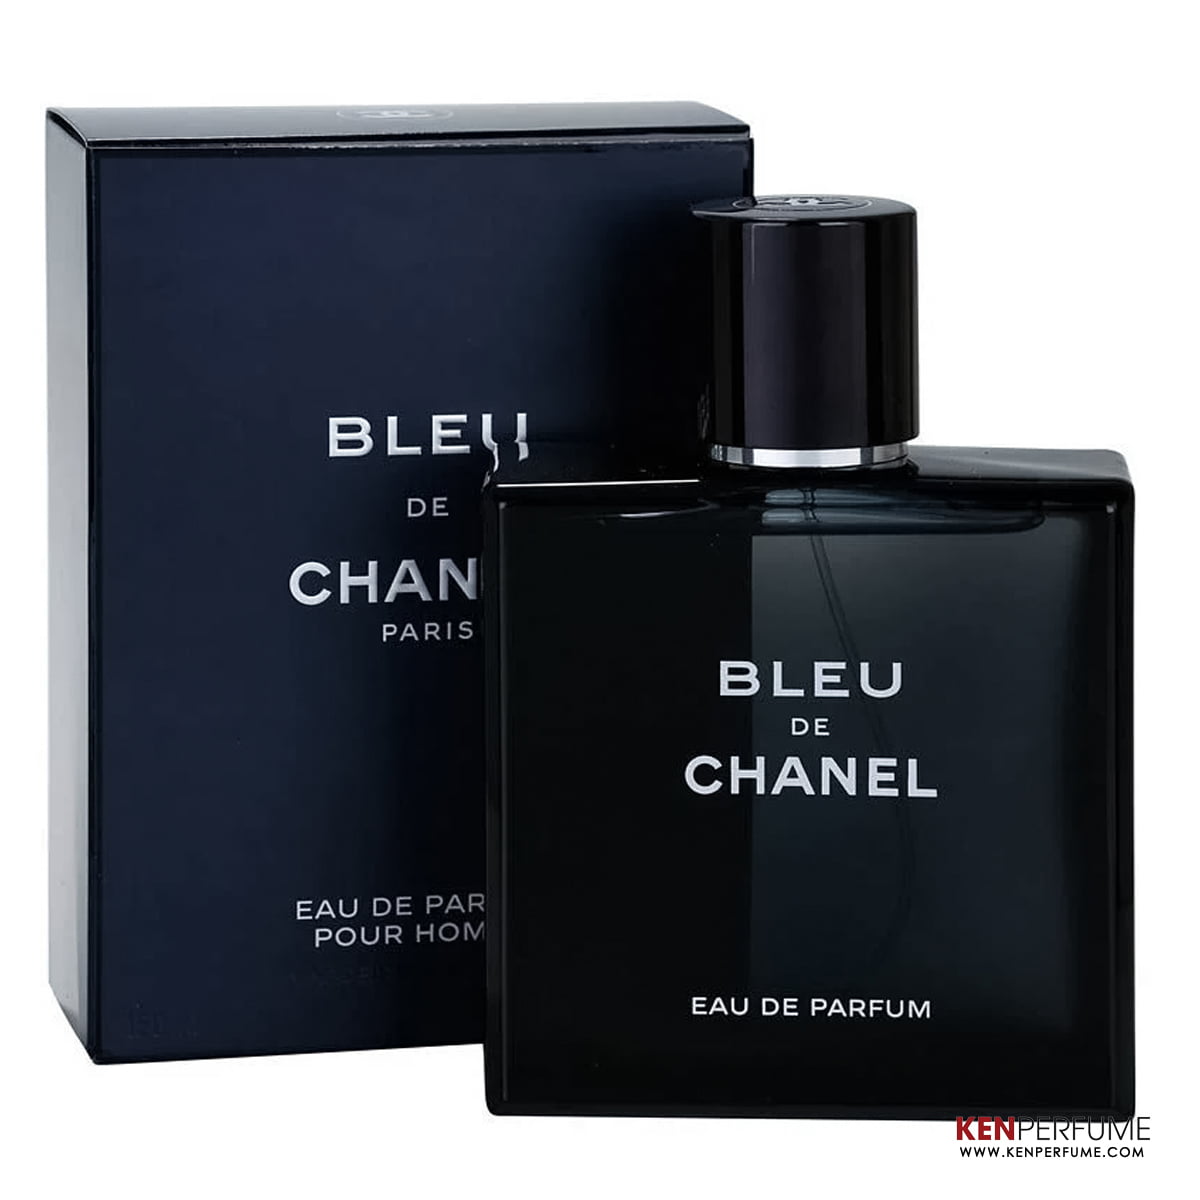 Nước hoa nam Bleu de Chanel Eau de Toilette 100ml 50ml  Myan  Hàng Mỹ  nội địa